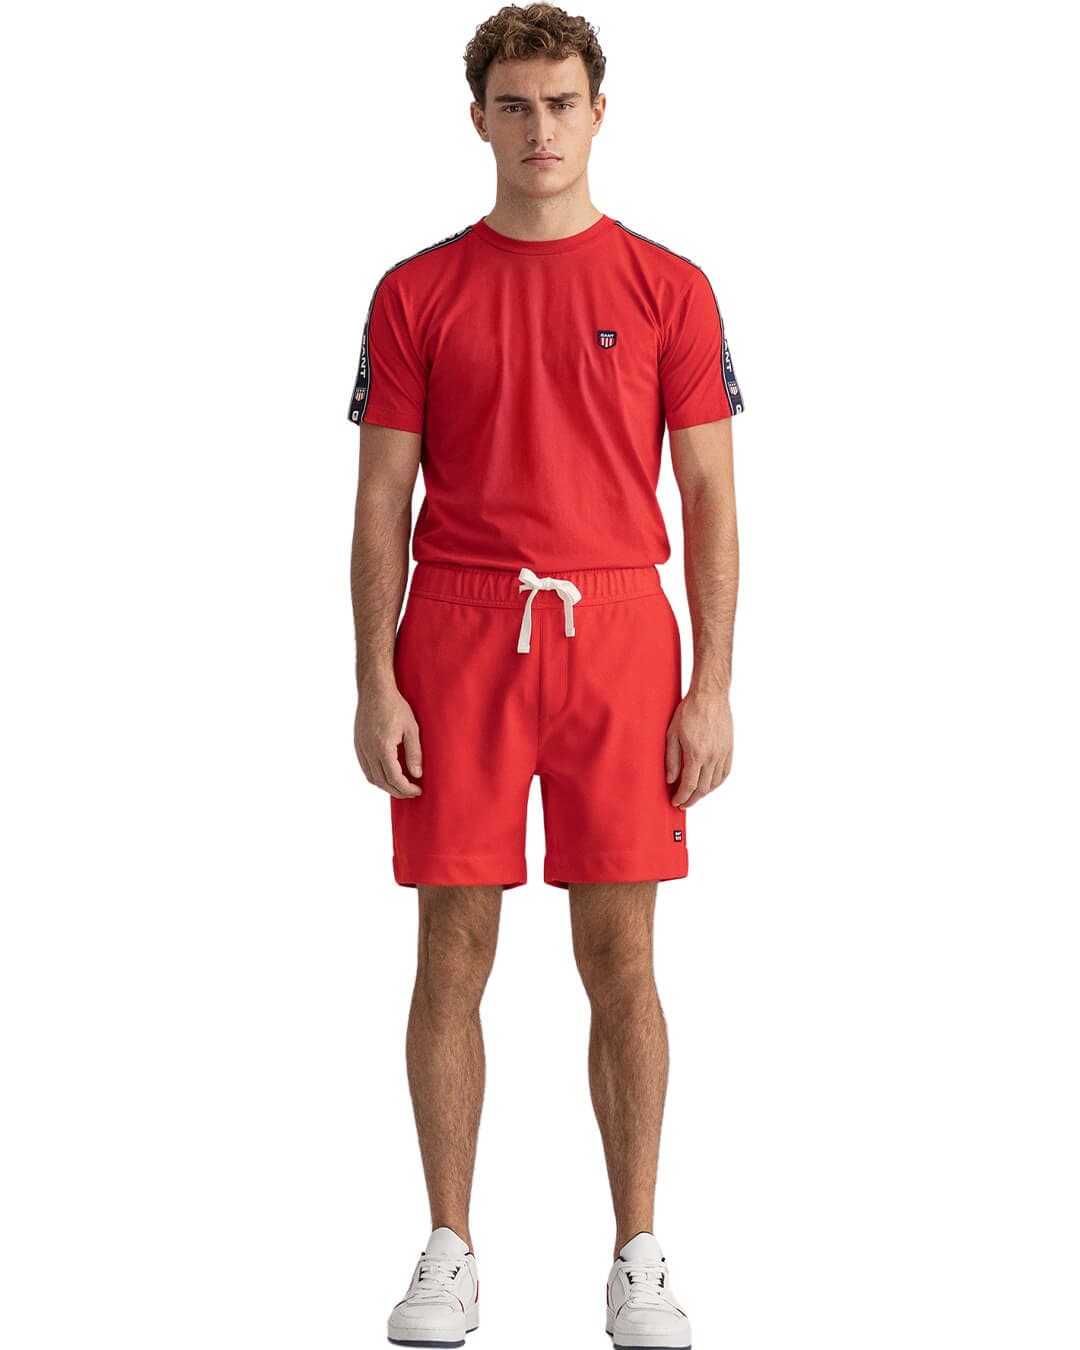 Gant Shorts Gant Retro Shield Drawstring Red Shorts